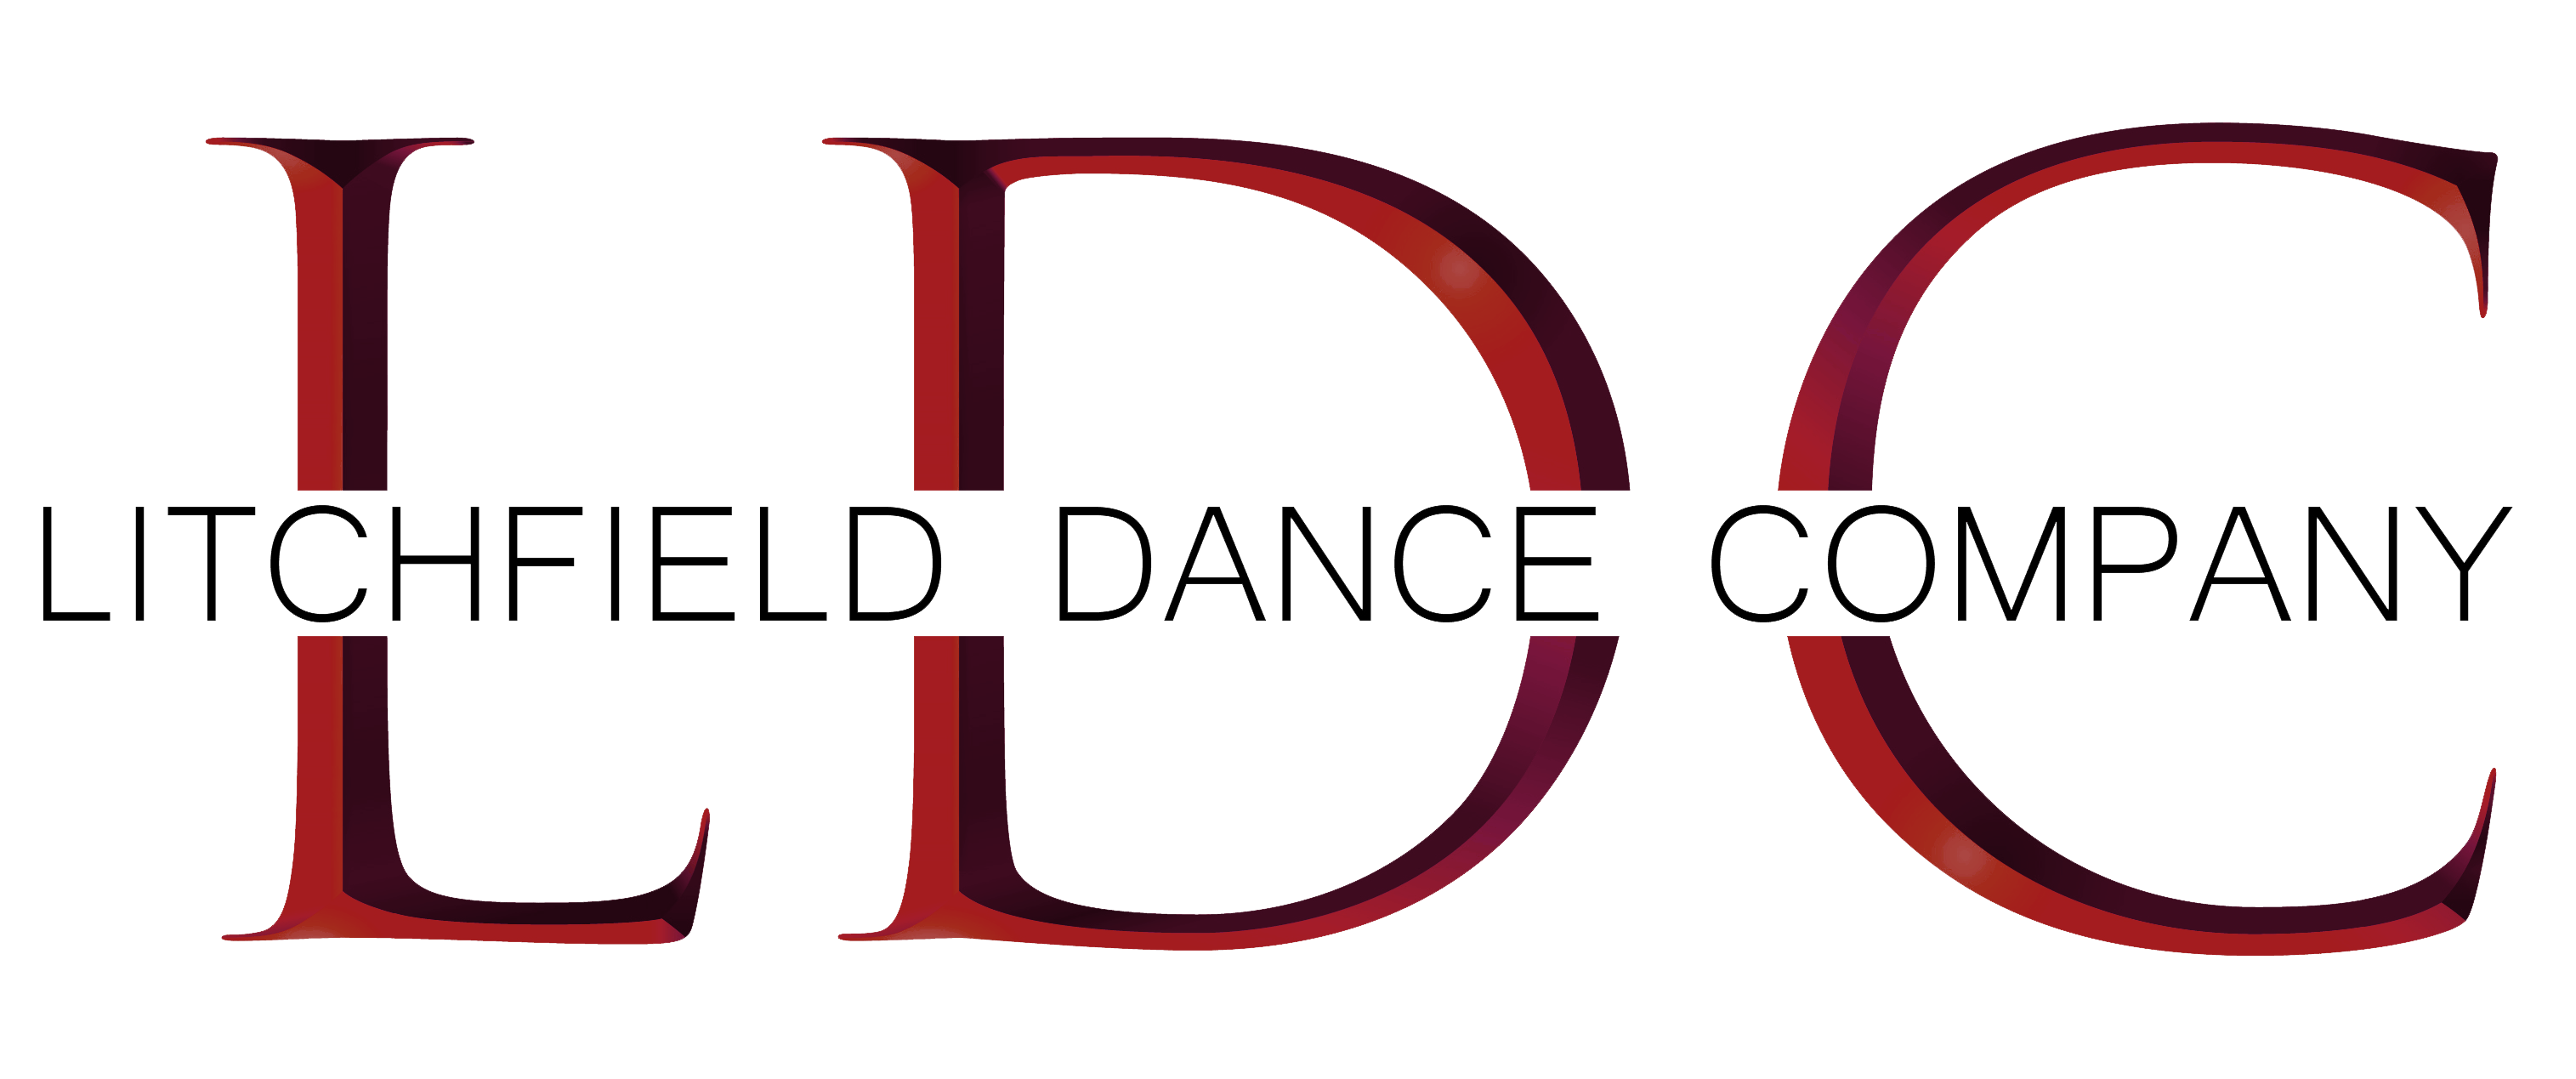 Litchfield Logo - Litchfield Dance Company – Litchfield Dance Arts Academy